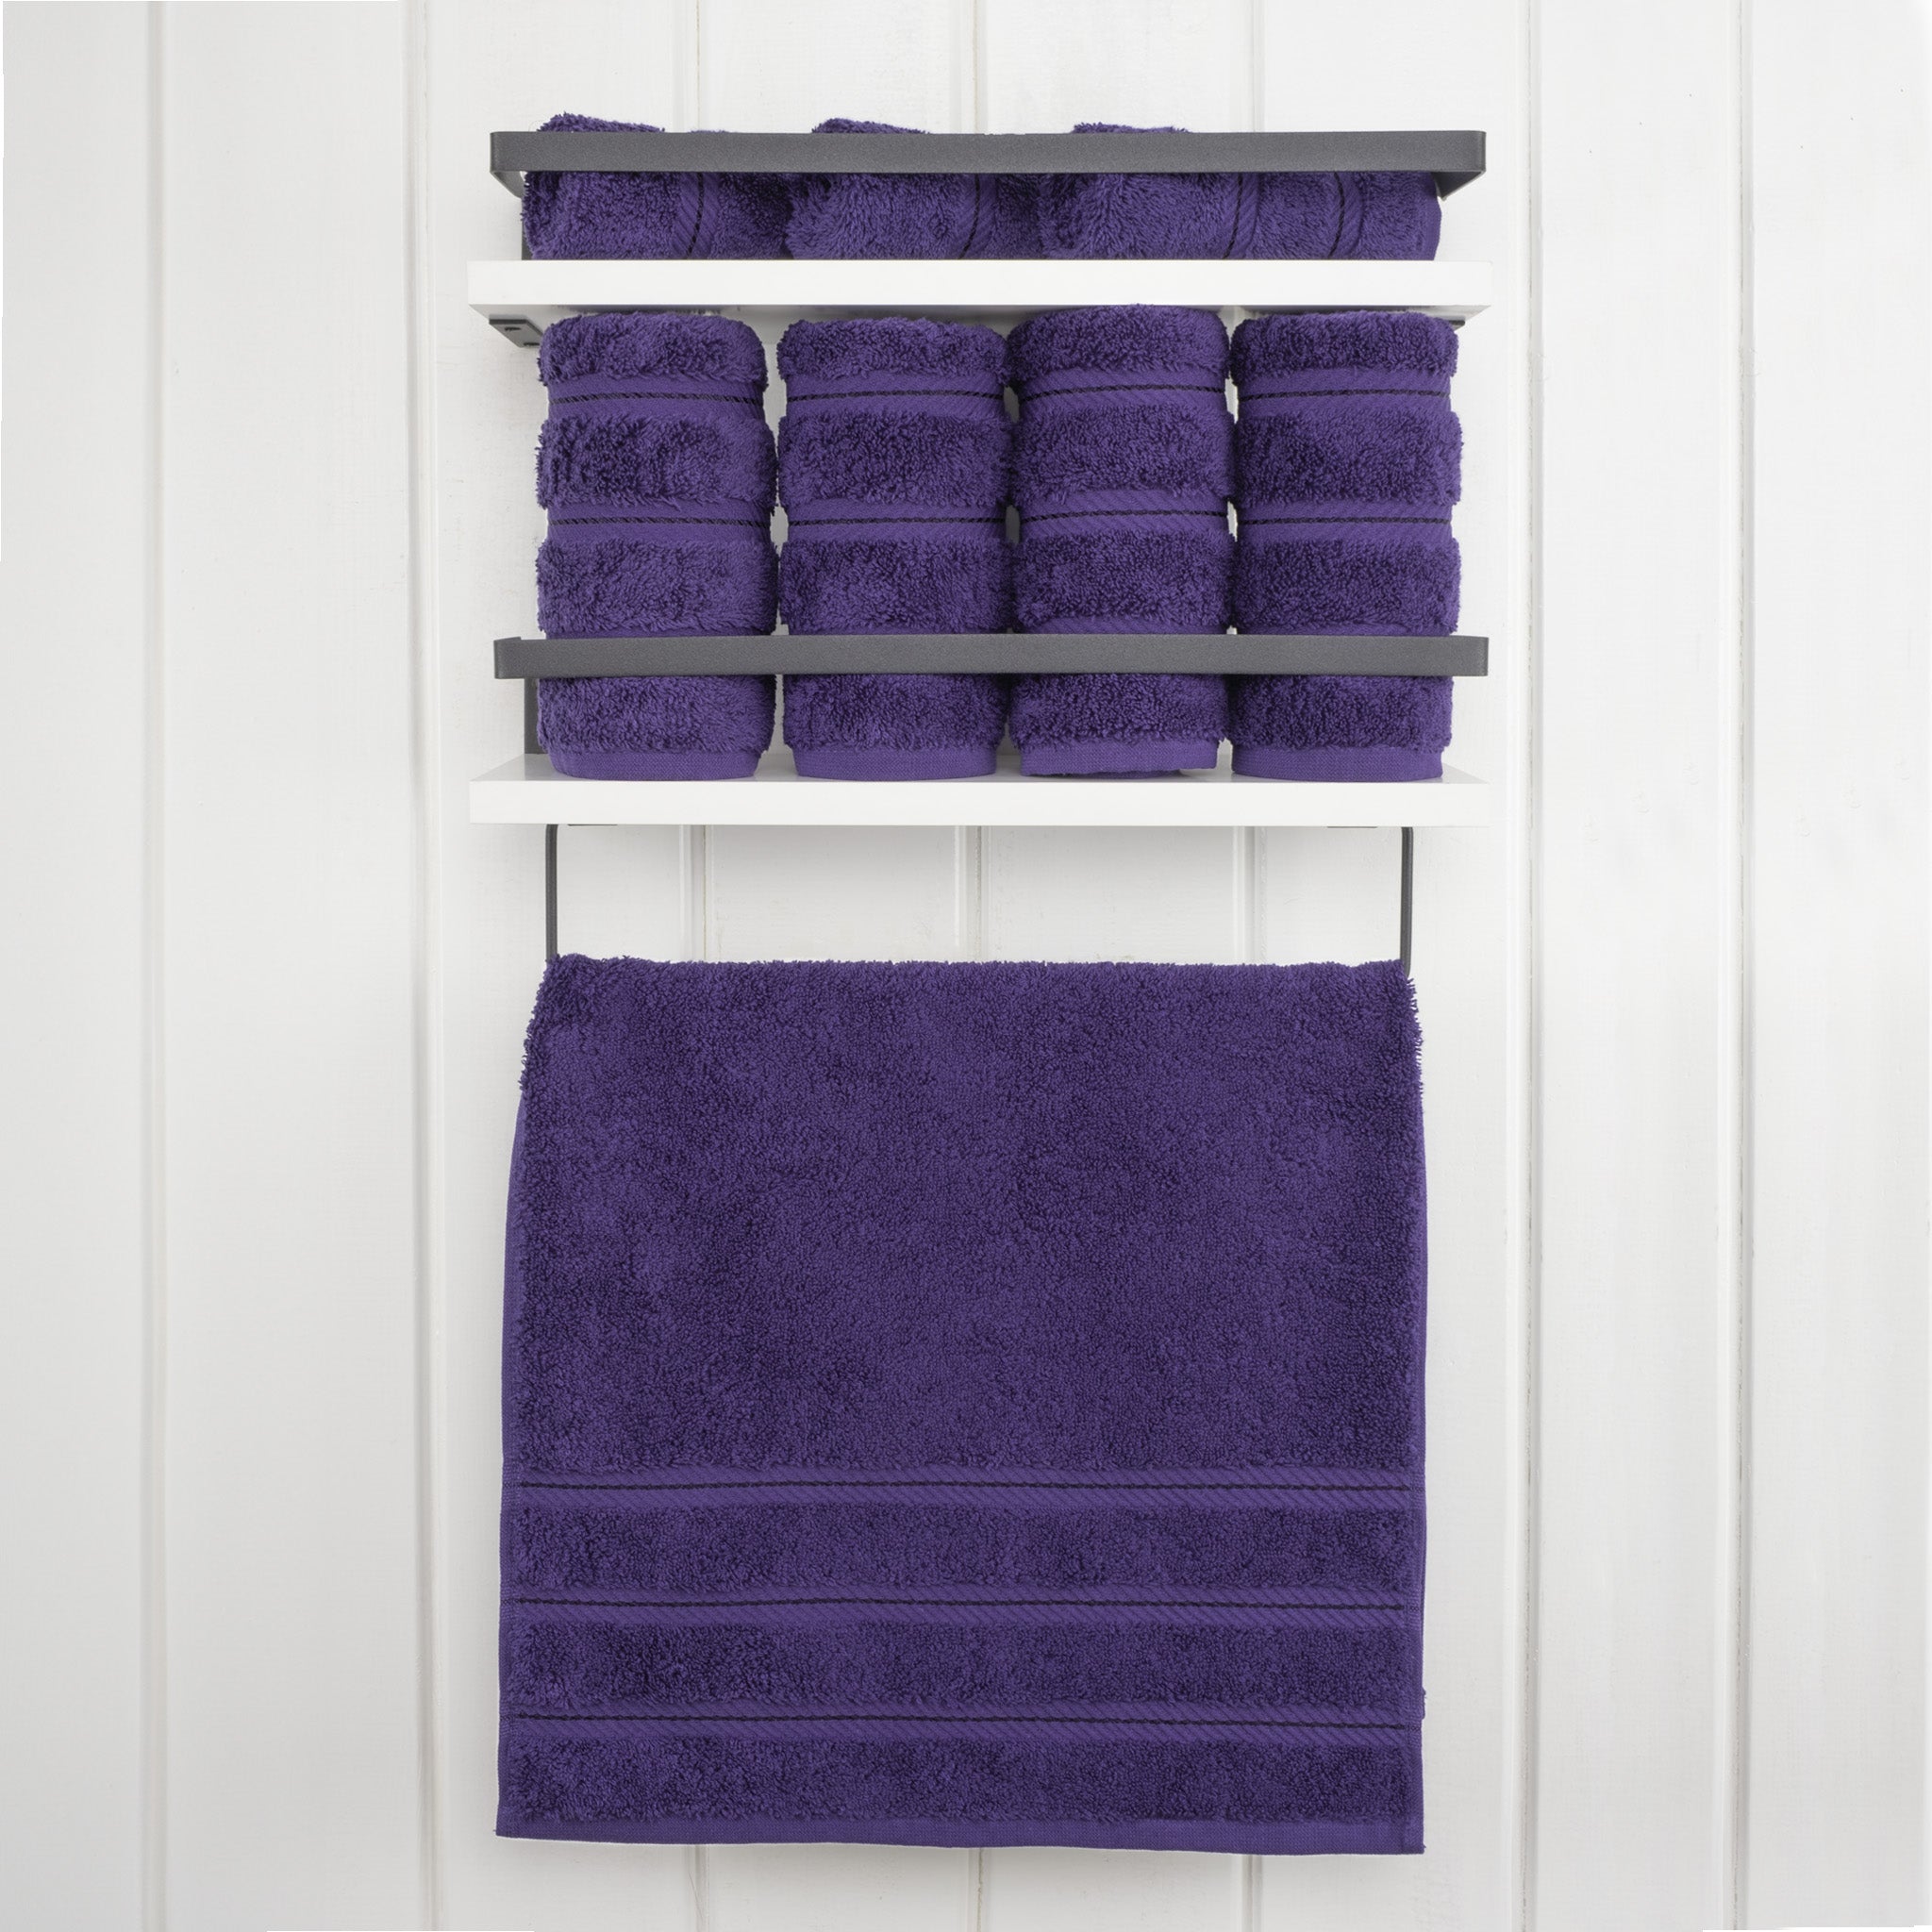  American Soft Linen 100% Turkish Cotton 4 Pack Hand Towel Set  purple-2